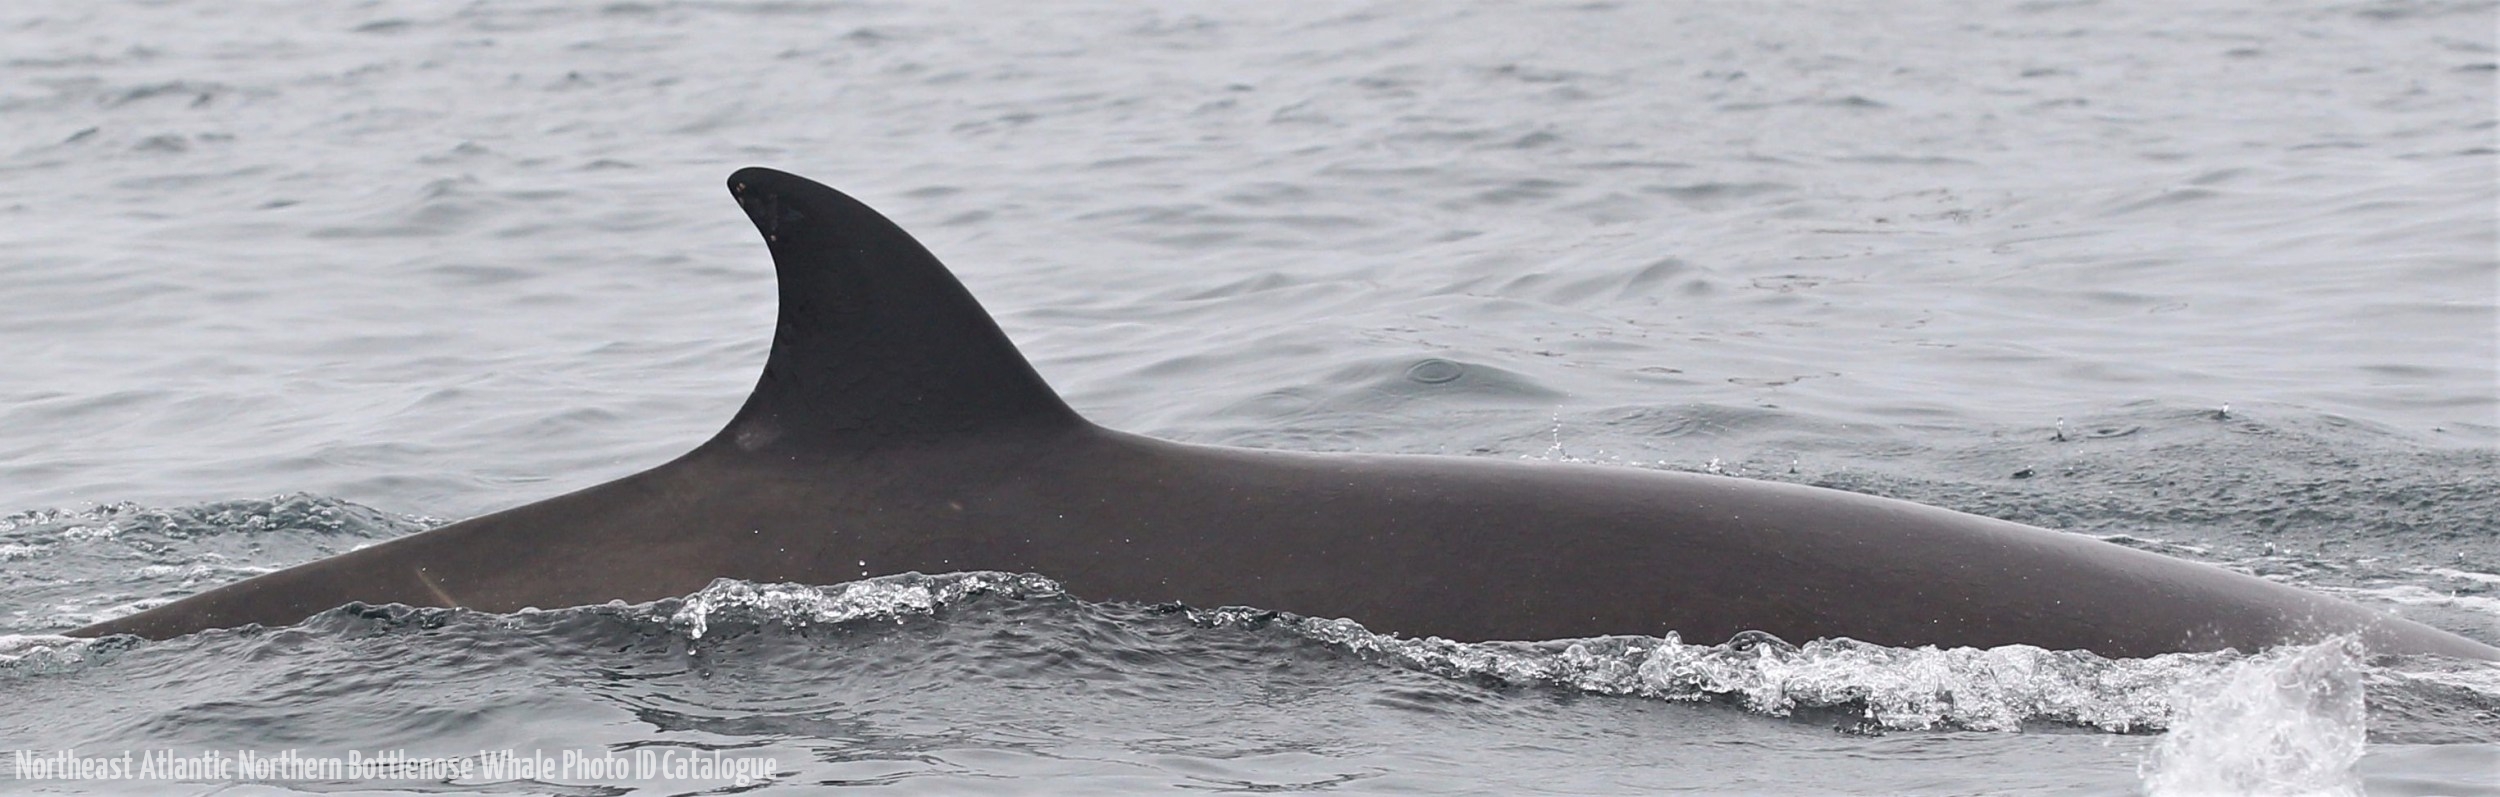 Whale ID: 0382,  Date taken: 21-06-2016,  Photographer: Lars Kleivane & Rune R. Hansen